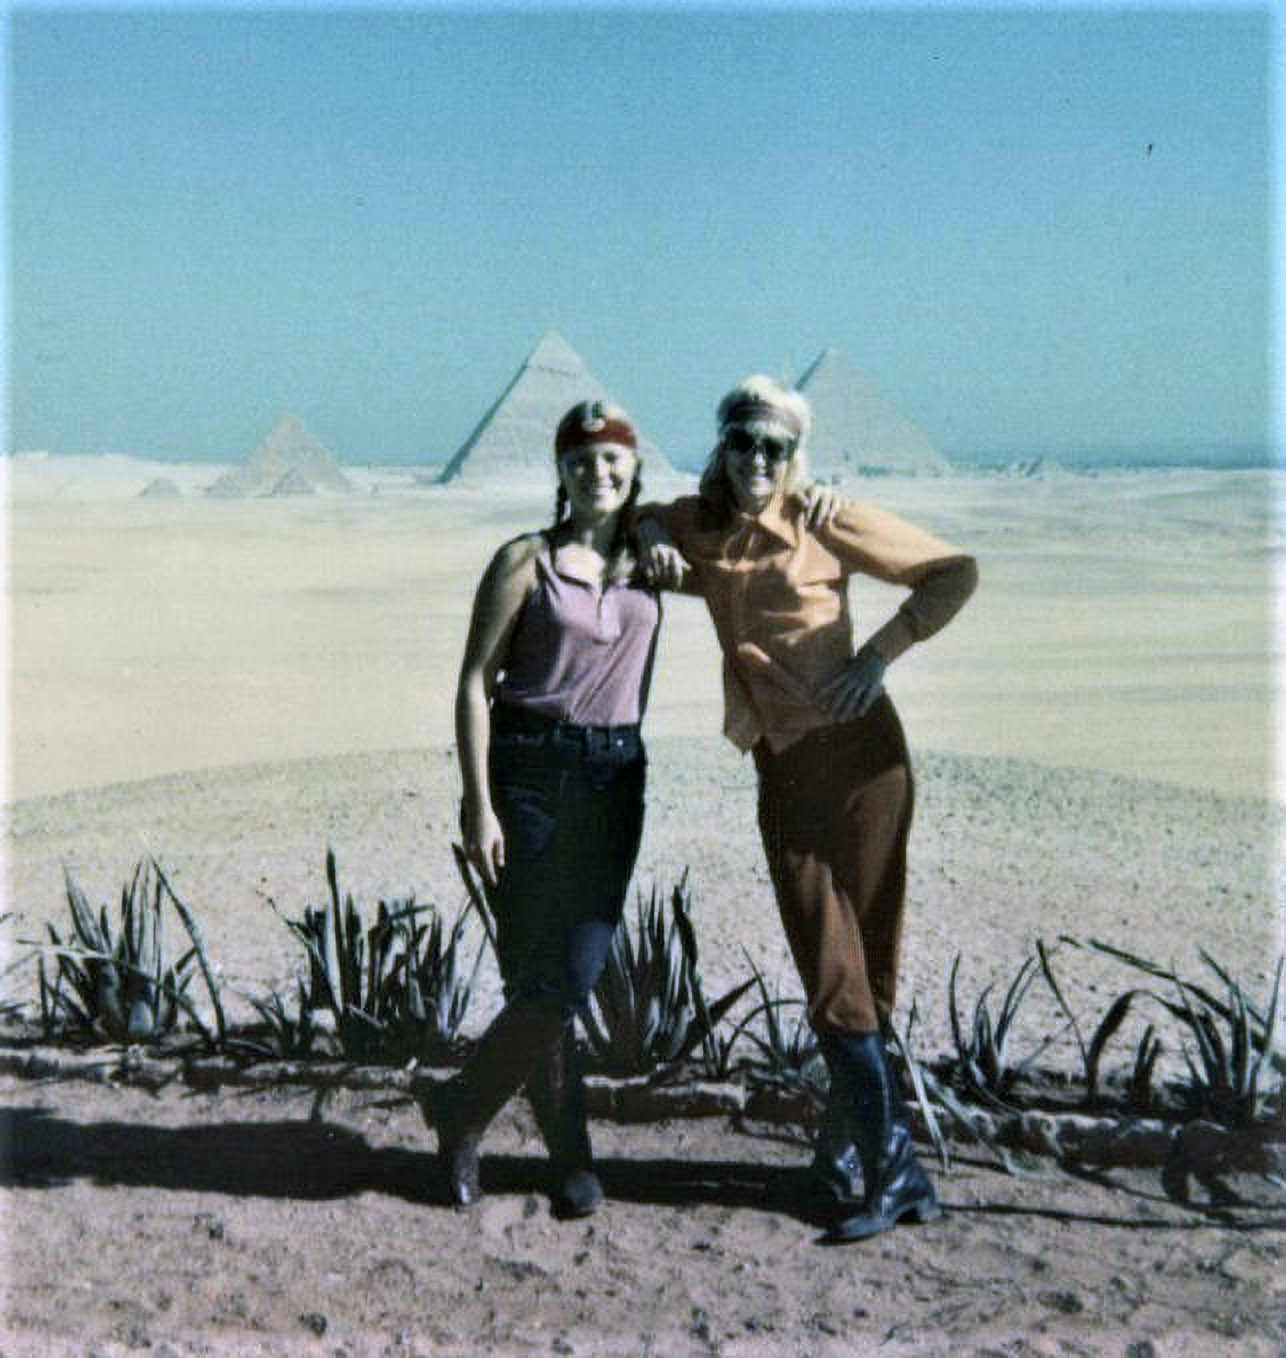 (l-r) Lisa Hartt & Pat Nunn at the Pyramids 1971 